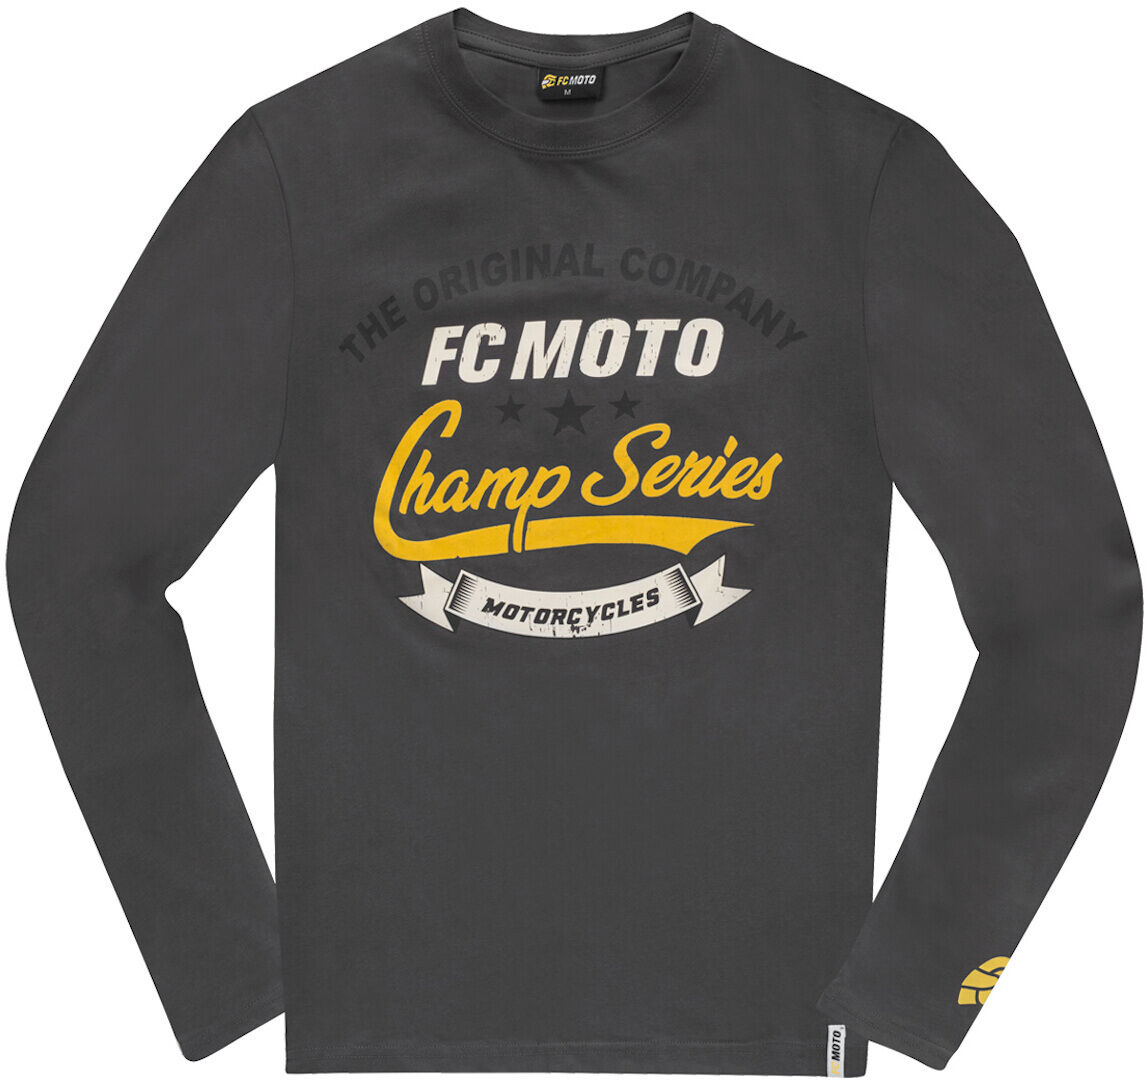 FC-Moto Champ Series Camisa Longsleeve - Negro Gris